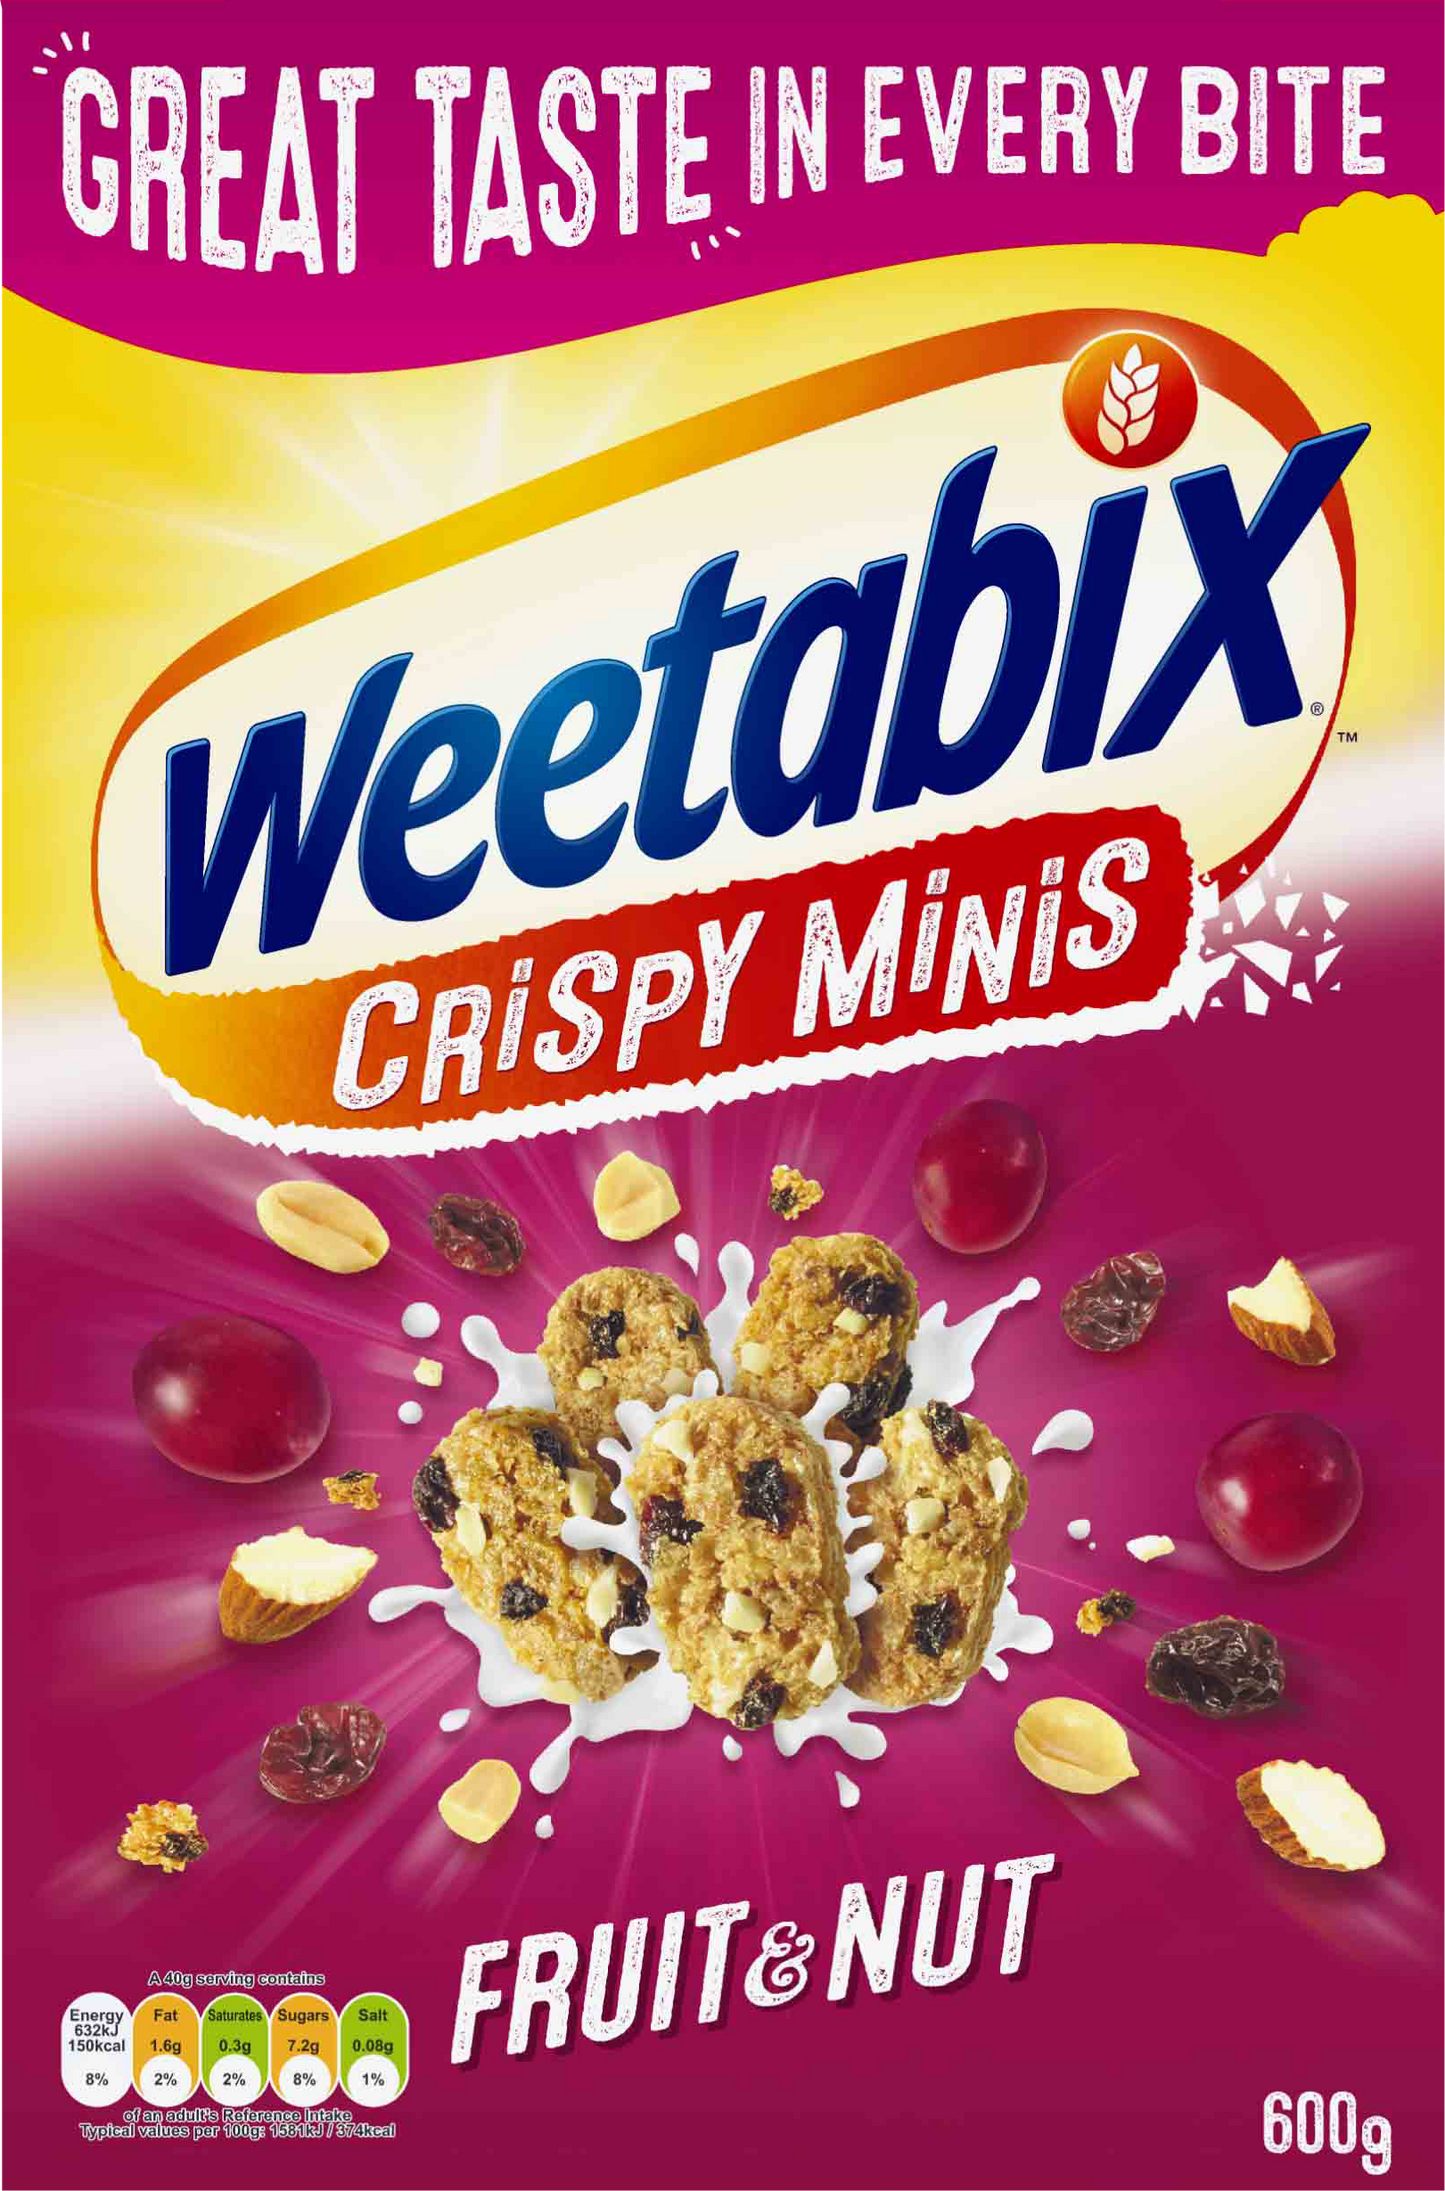 Weetabix: Crispy Minis: Fruit & Nut 600g (21.2oz)